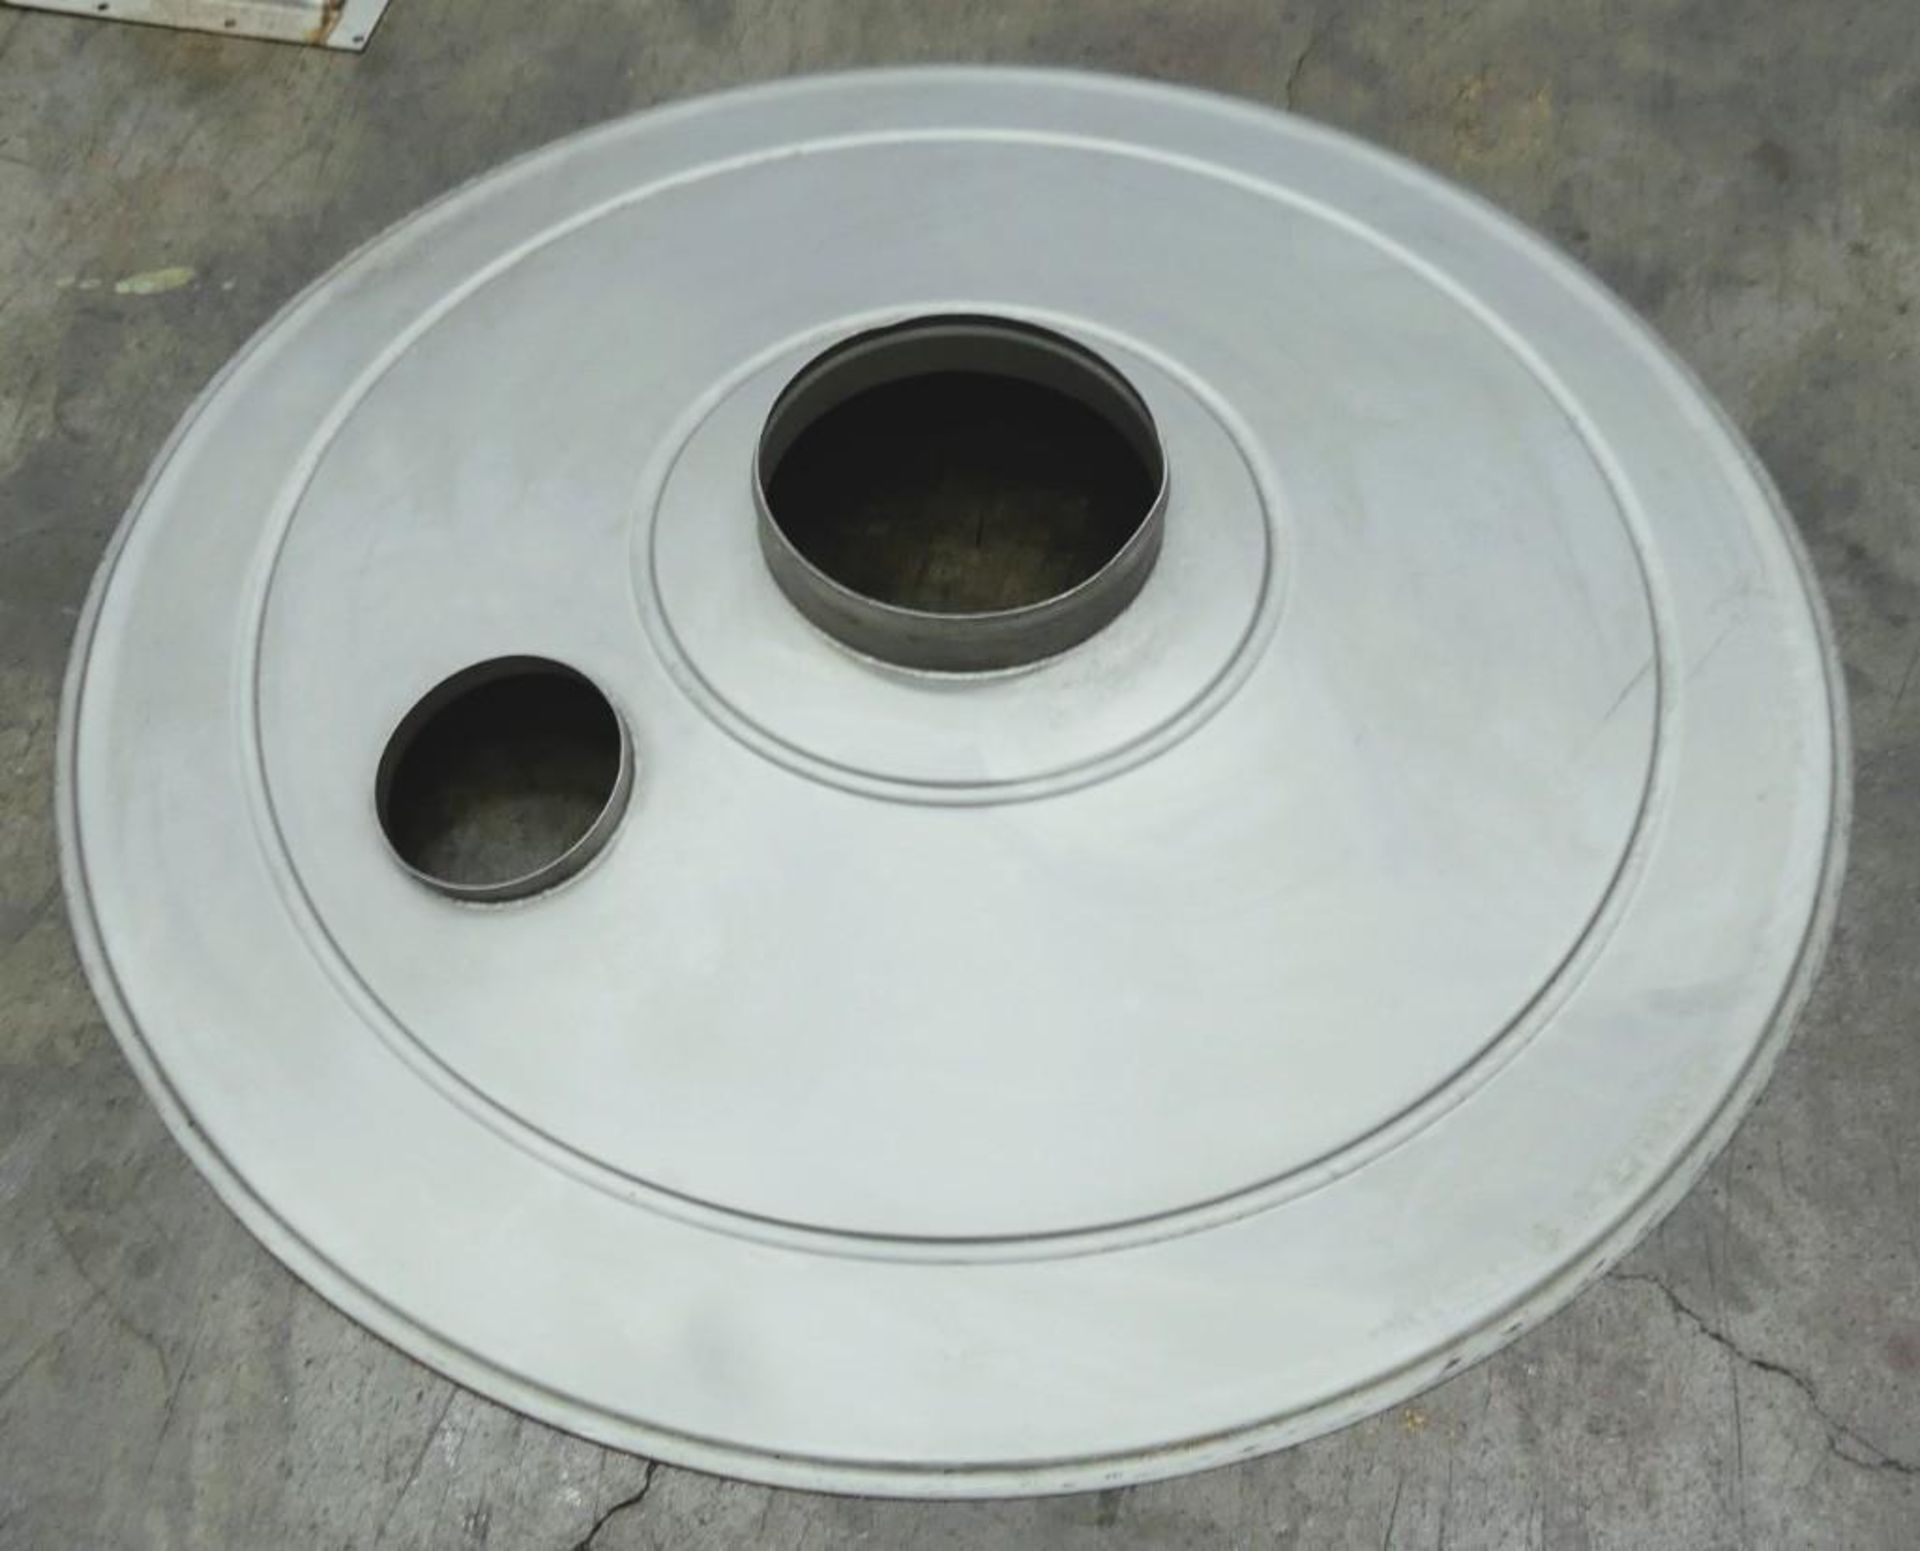 Vibratory Bowl Sifter - Image 14 of 17